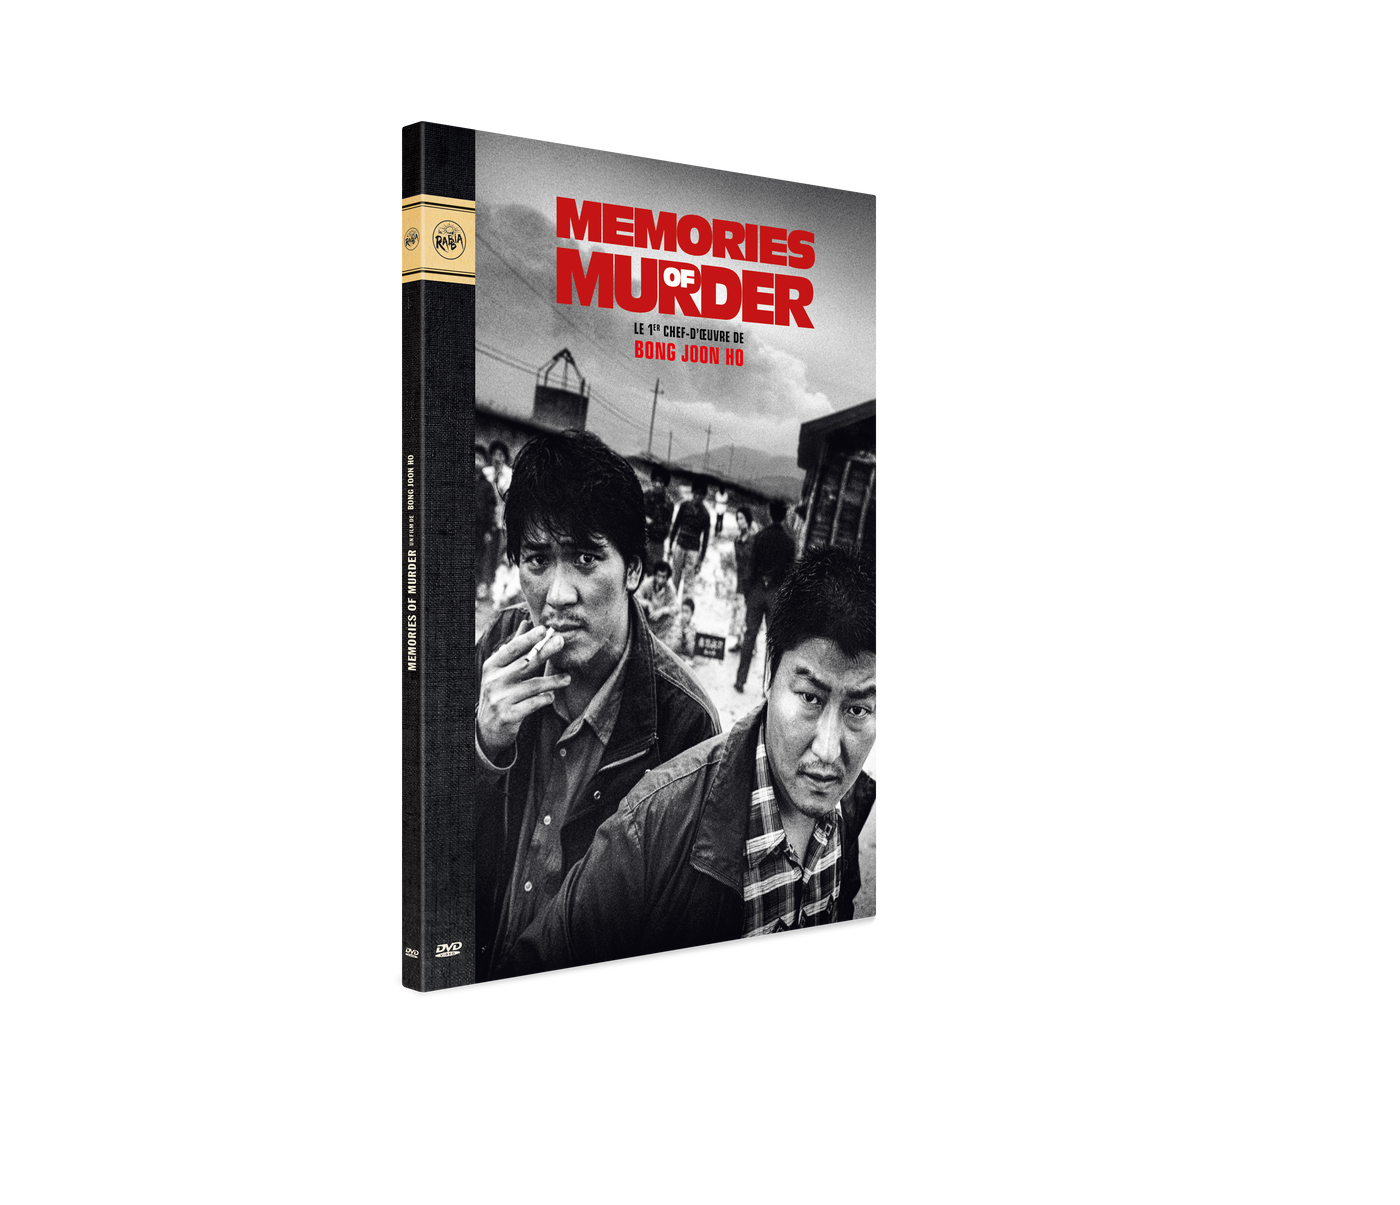 DVD Digipack "Memories of Murder"